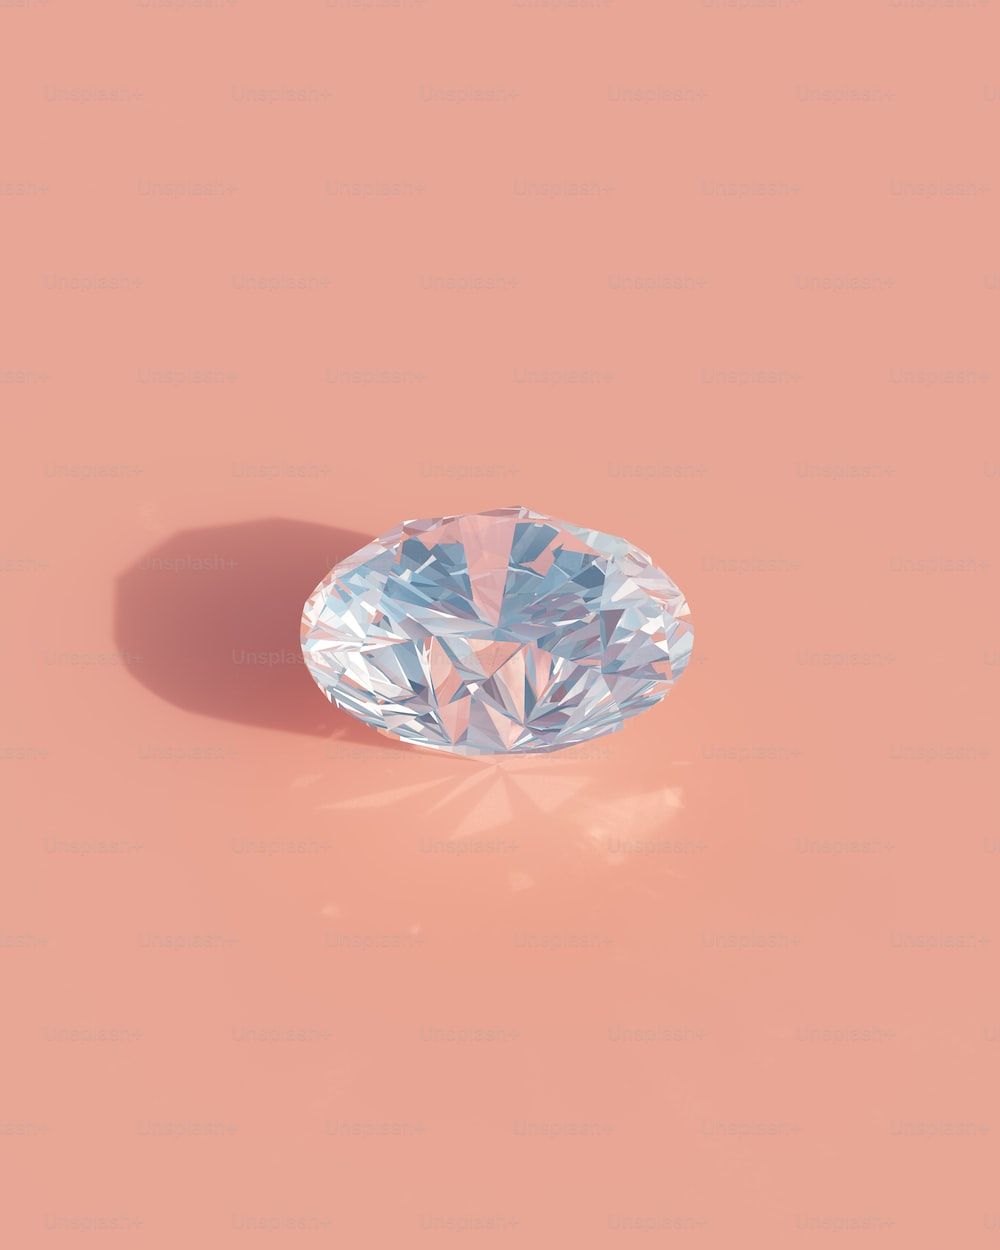 A large diamond on a pink background - Diamond